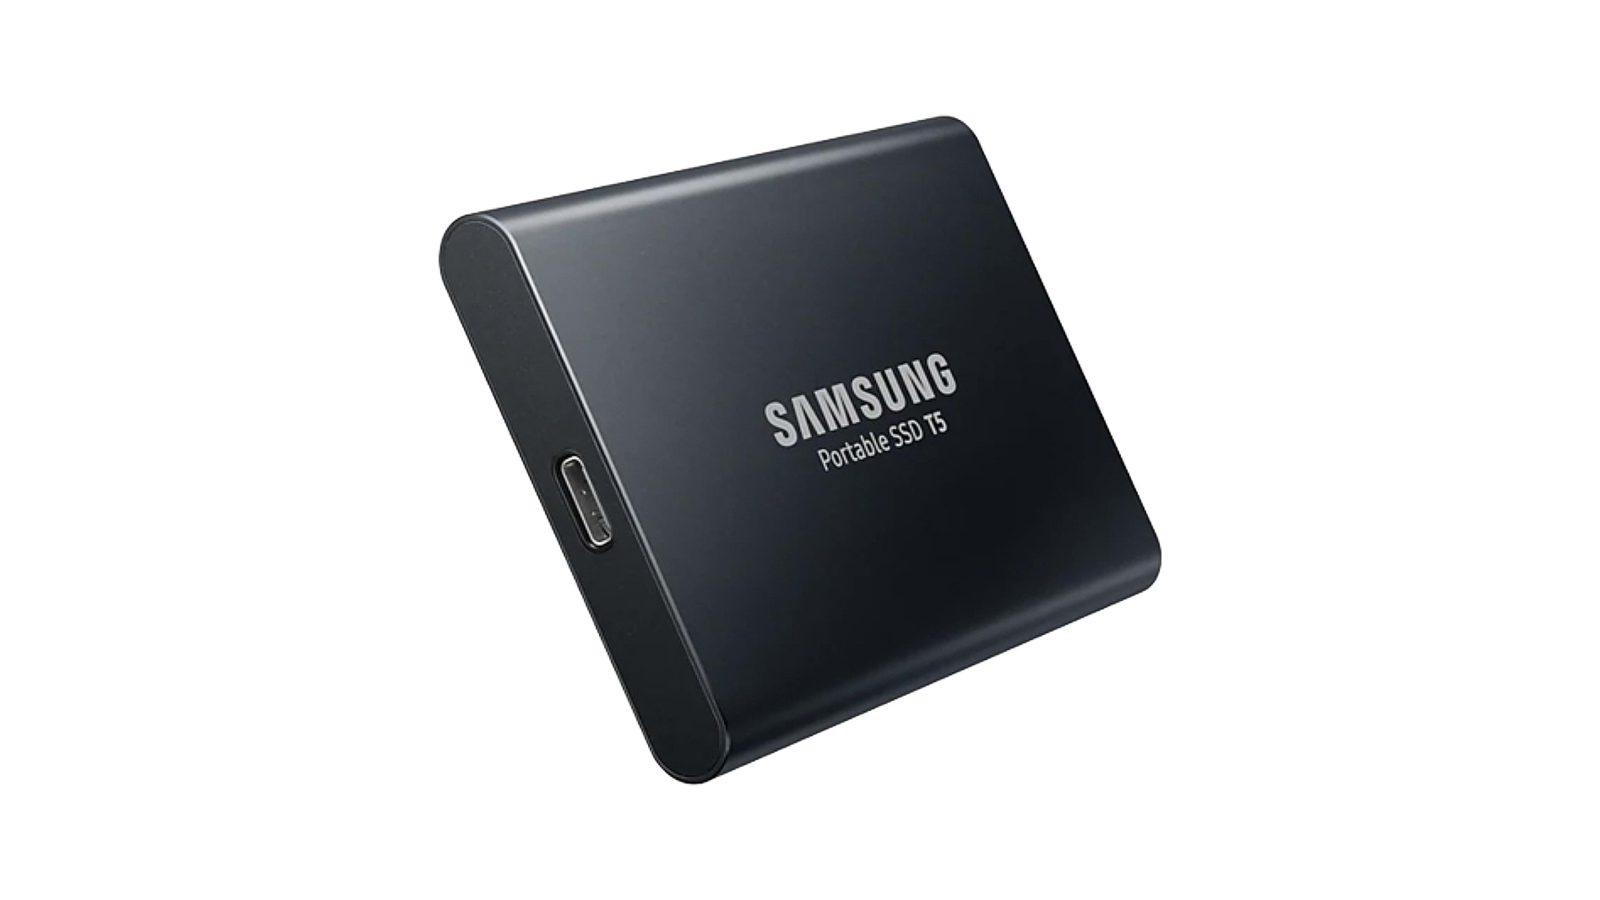 Samsung T5 SSD - Great value external hard drive